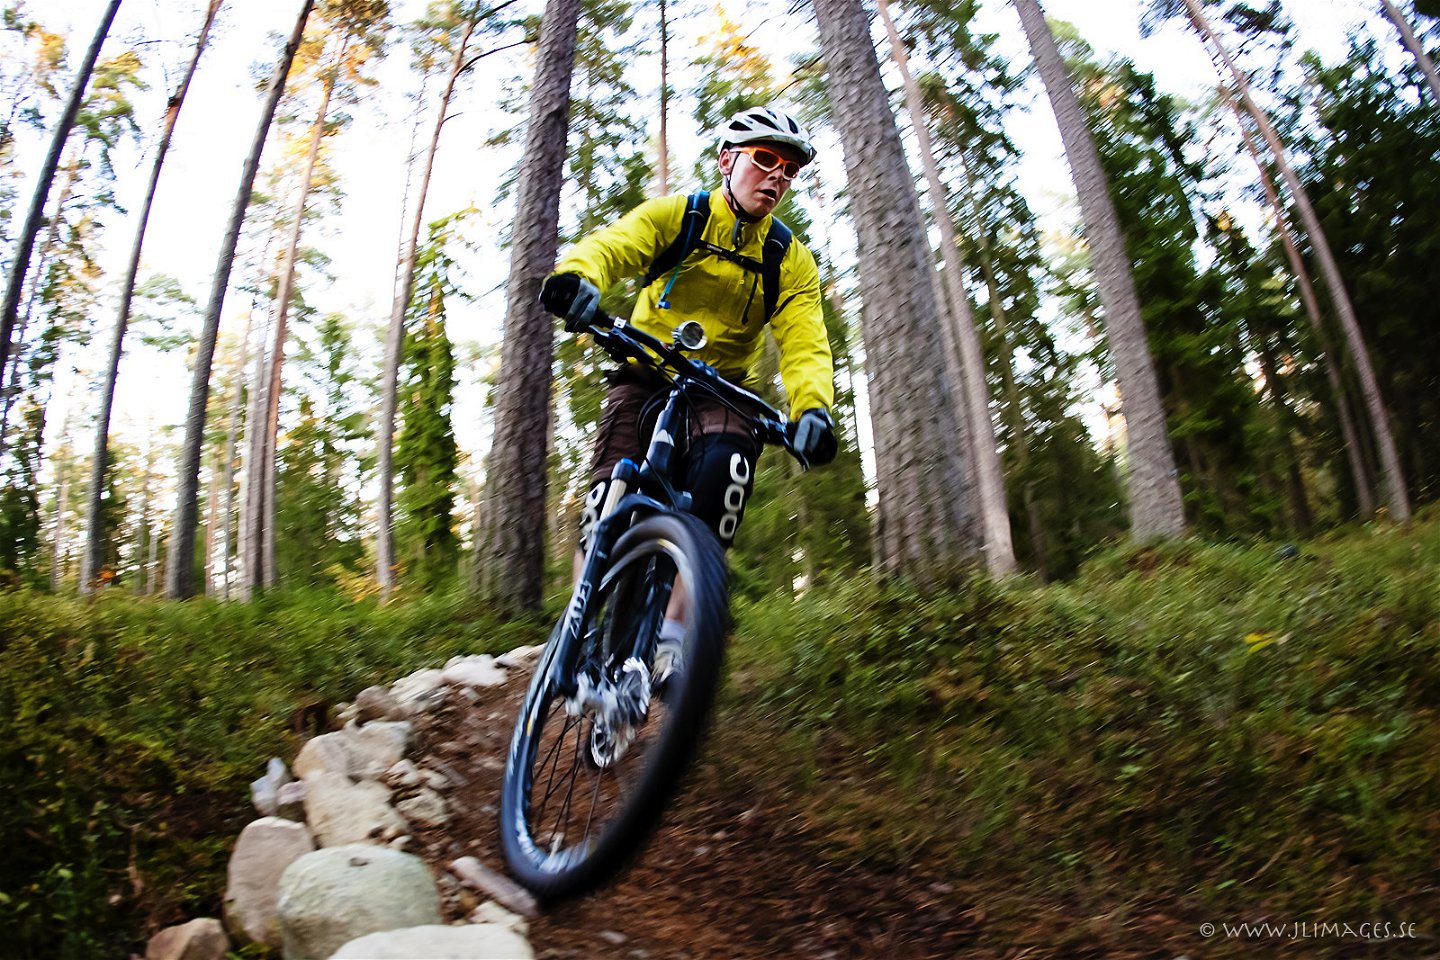 Fotograf: ljungdahl Cyklist: Stefan Hultqvist (Trailforks)